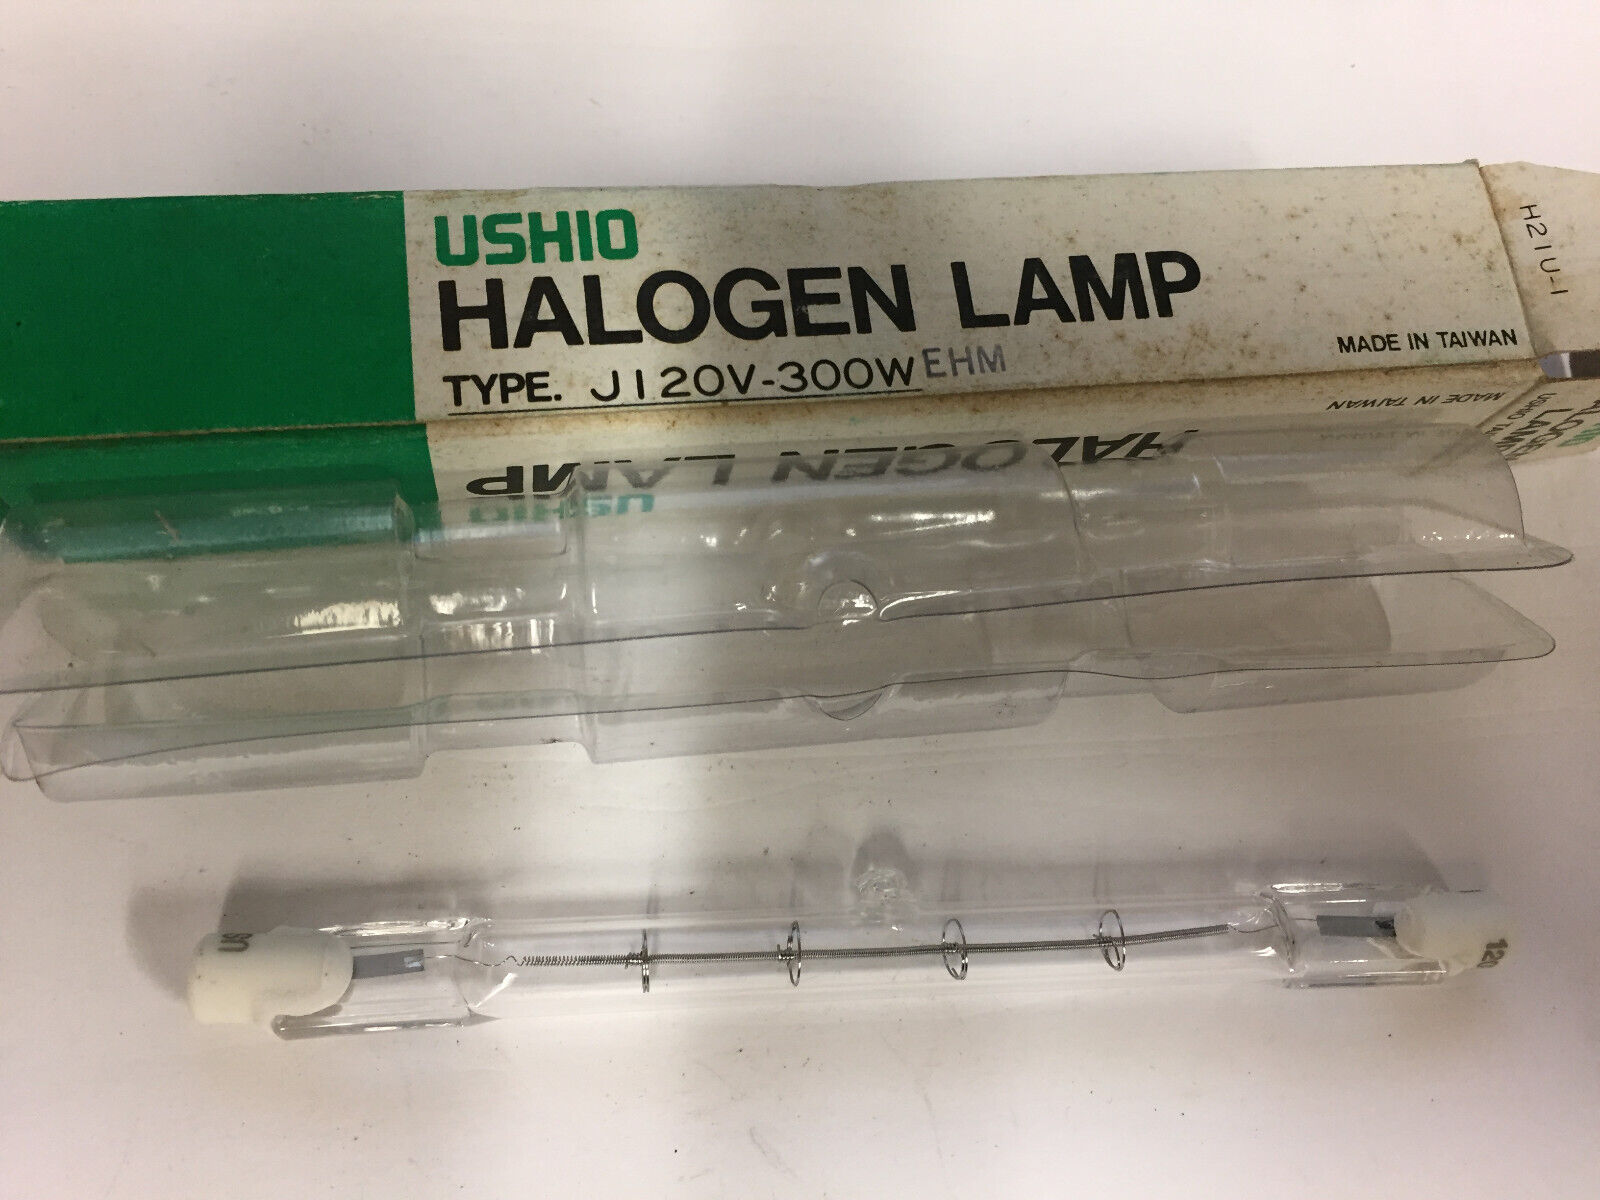 USHIO HALOGEN LAMP TYPE J120V-300W EHM 2PCS